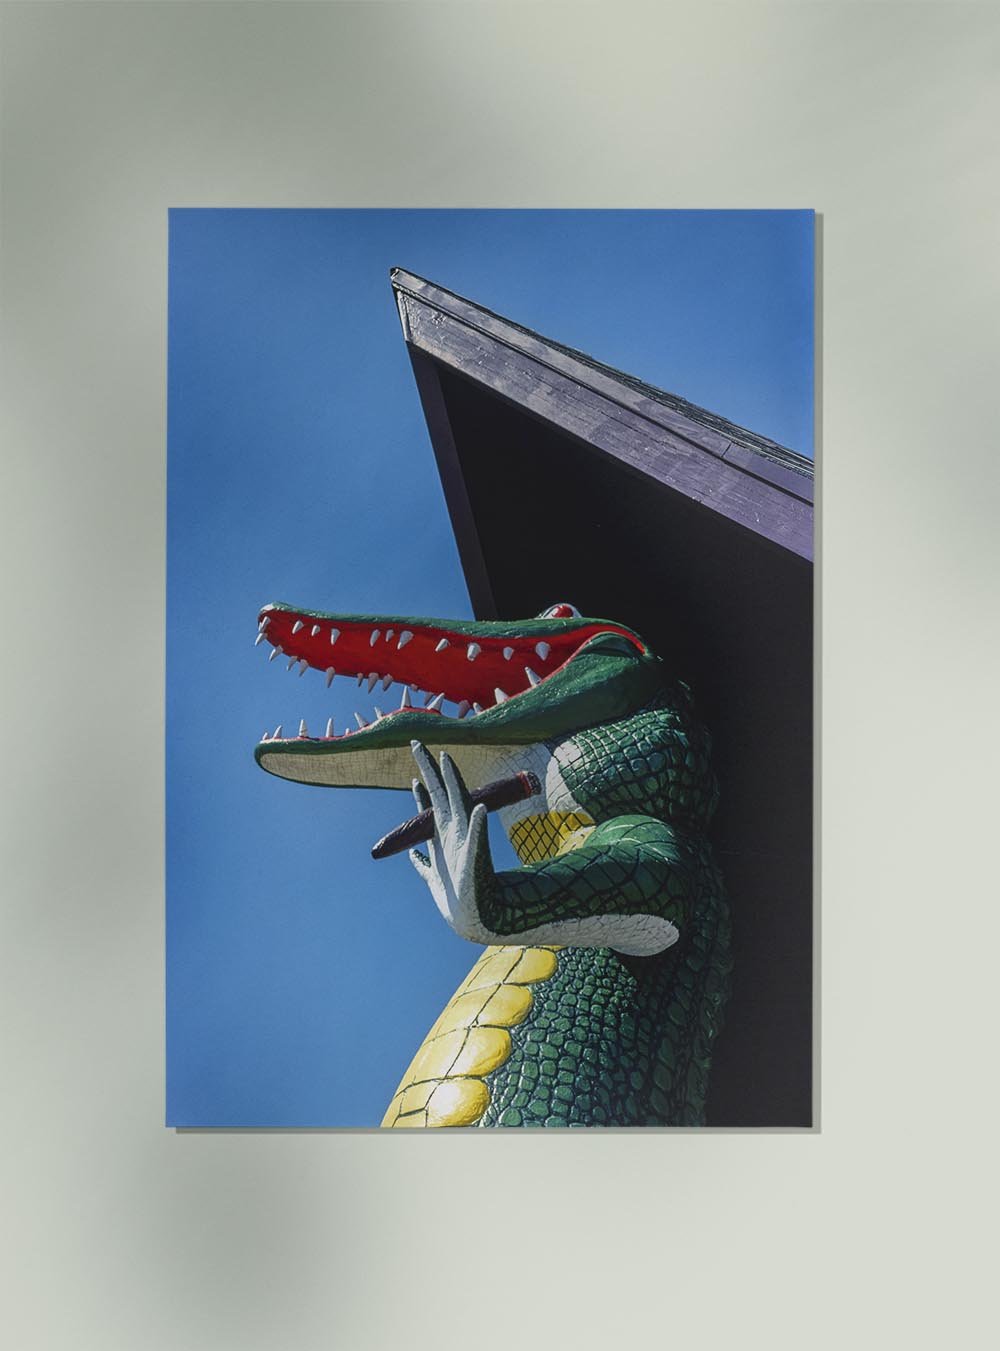 Gatorland Zoo alligator statue, Route 1, St. Augustine, Florida by John Margolies